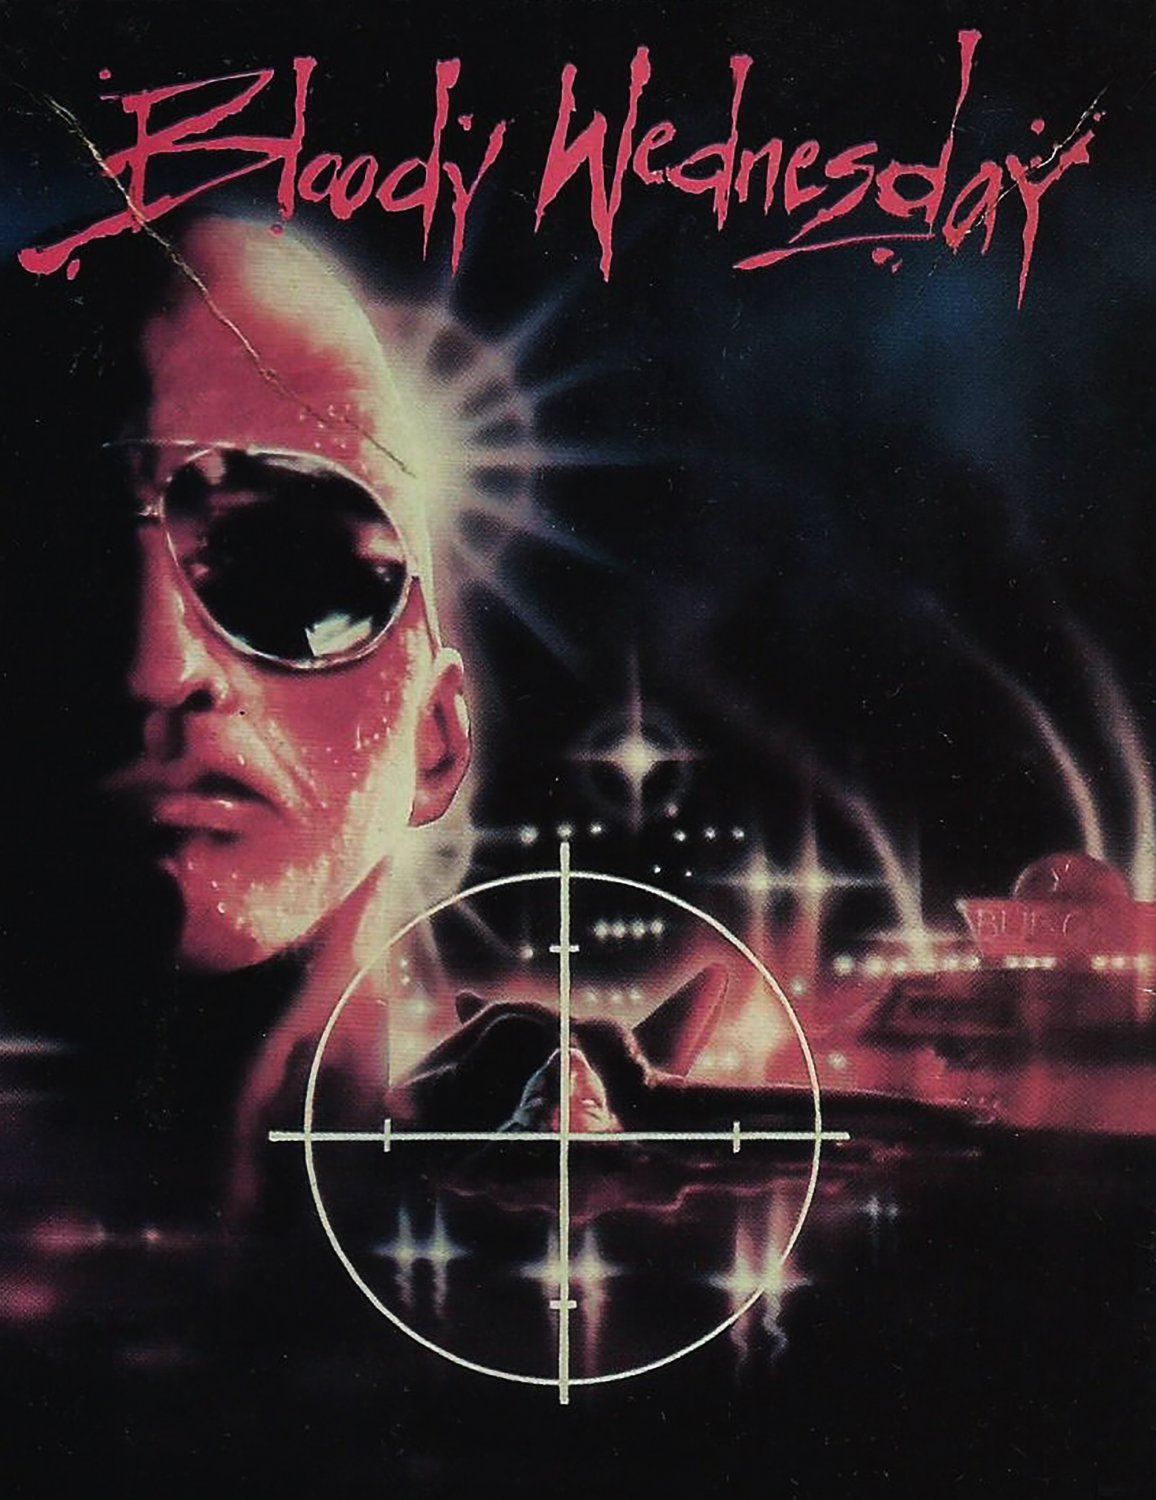 Bloody Wednesday (DVD)